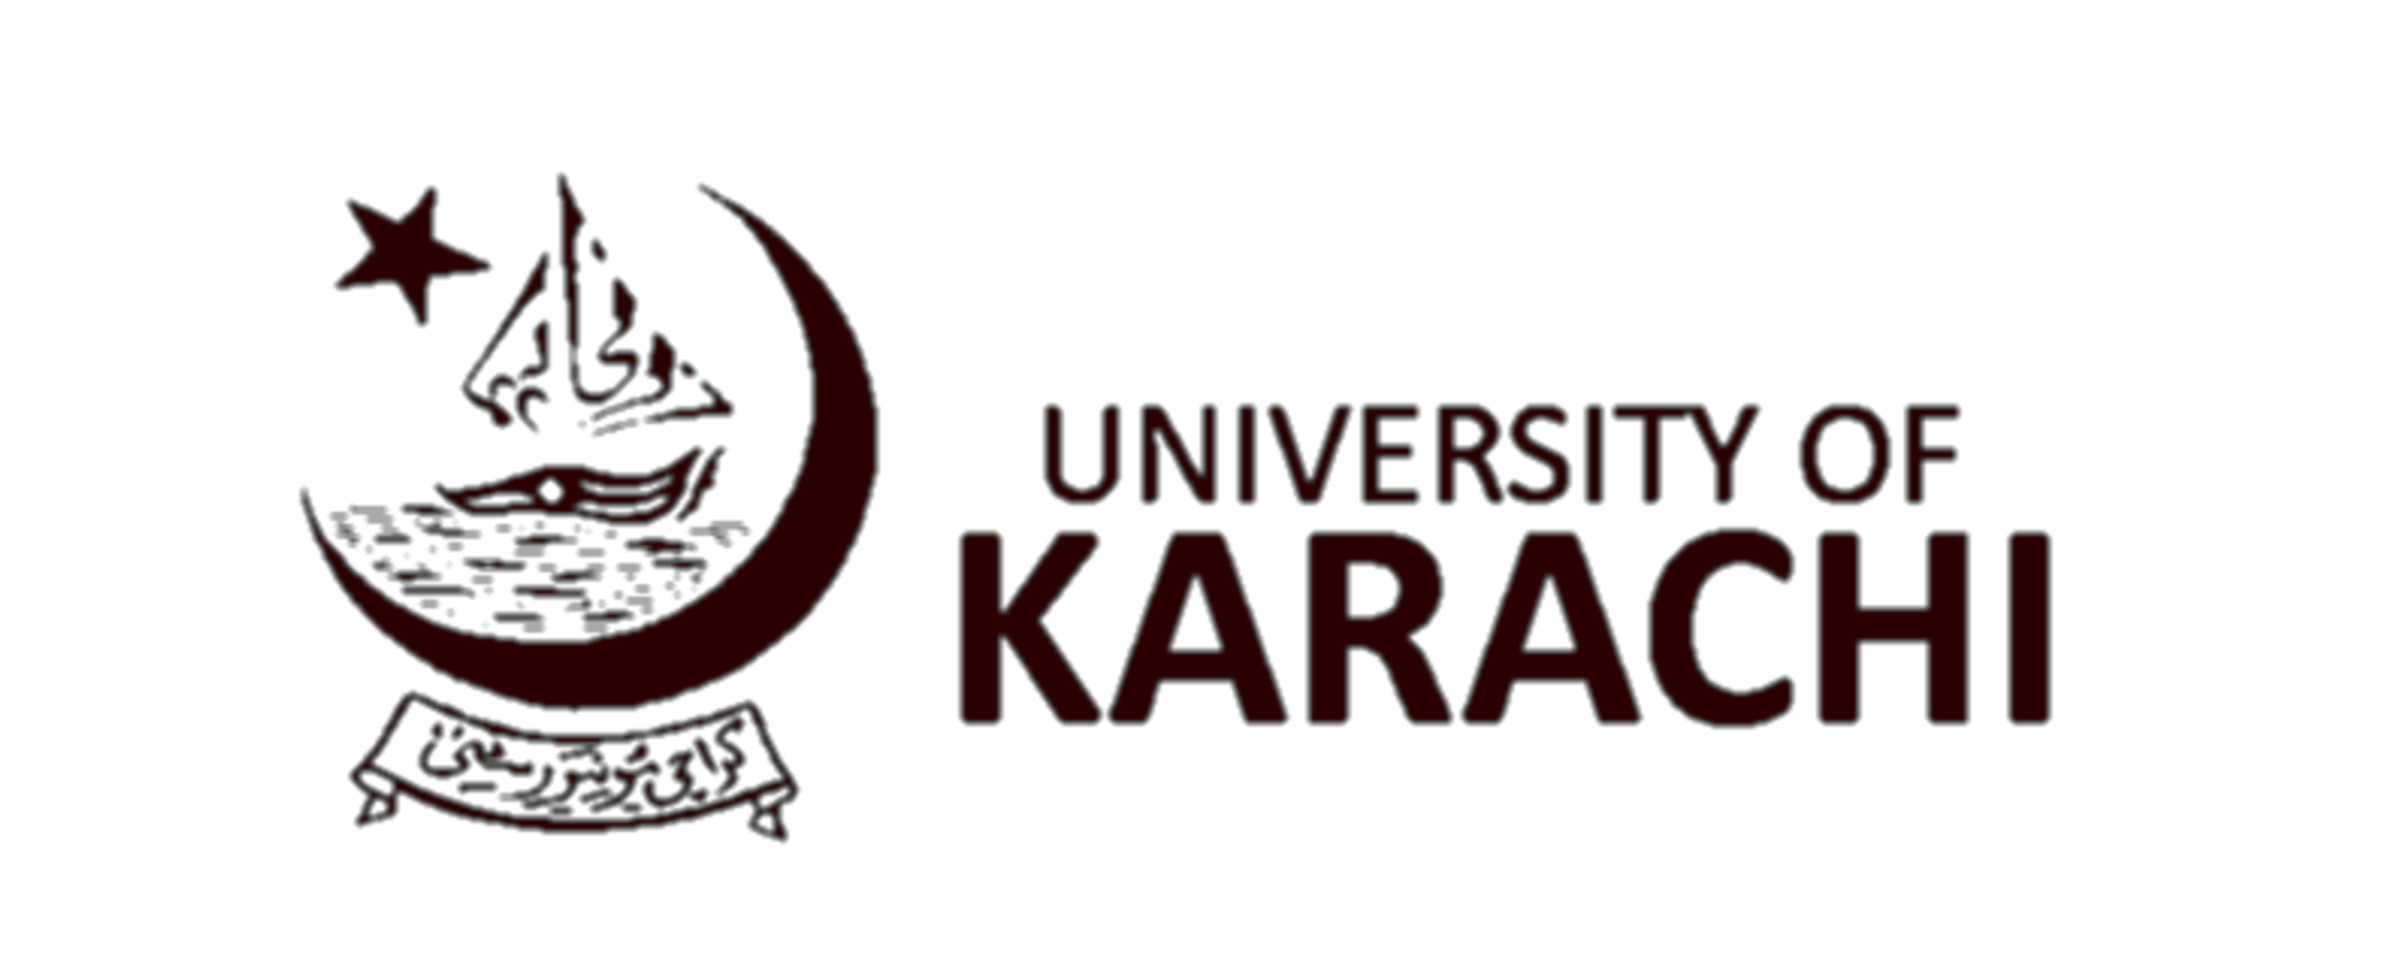 university of karachi MTI Maritime Training Institute affiliation logo karachi pakistan merchant navy courses how to join